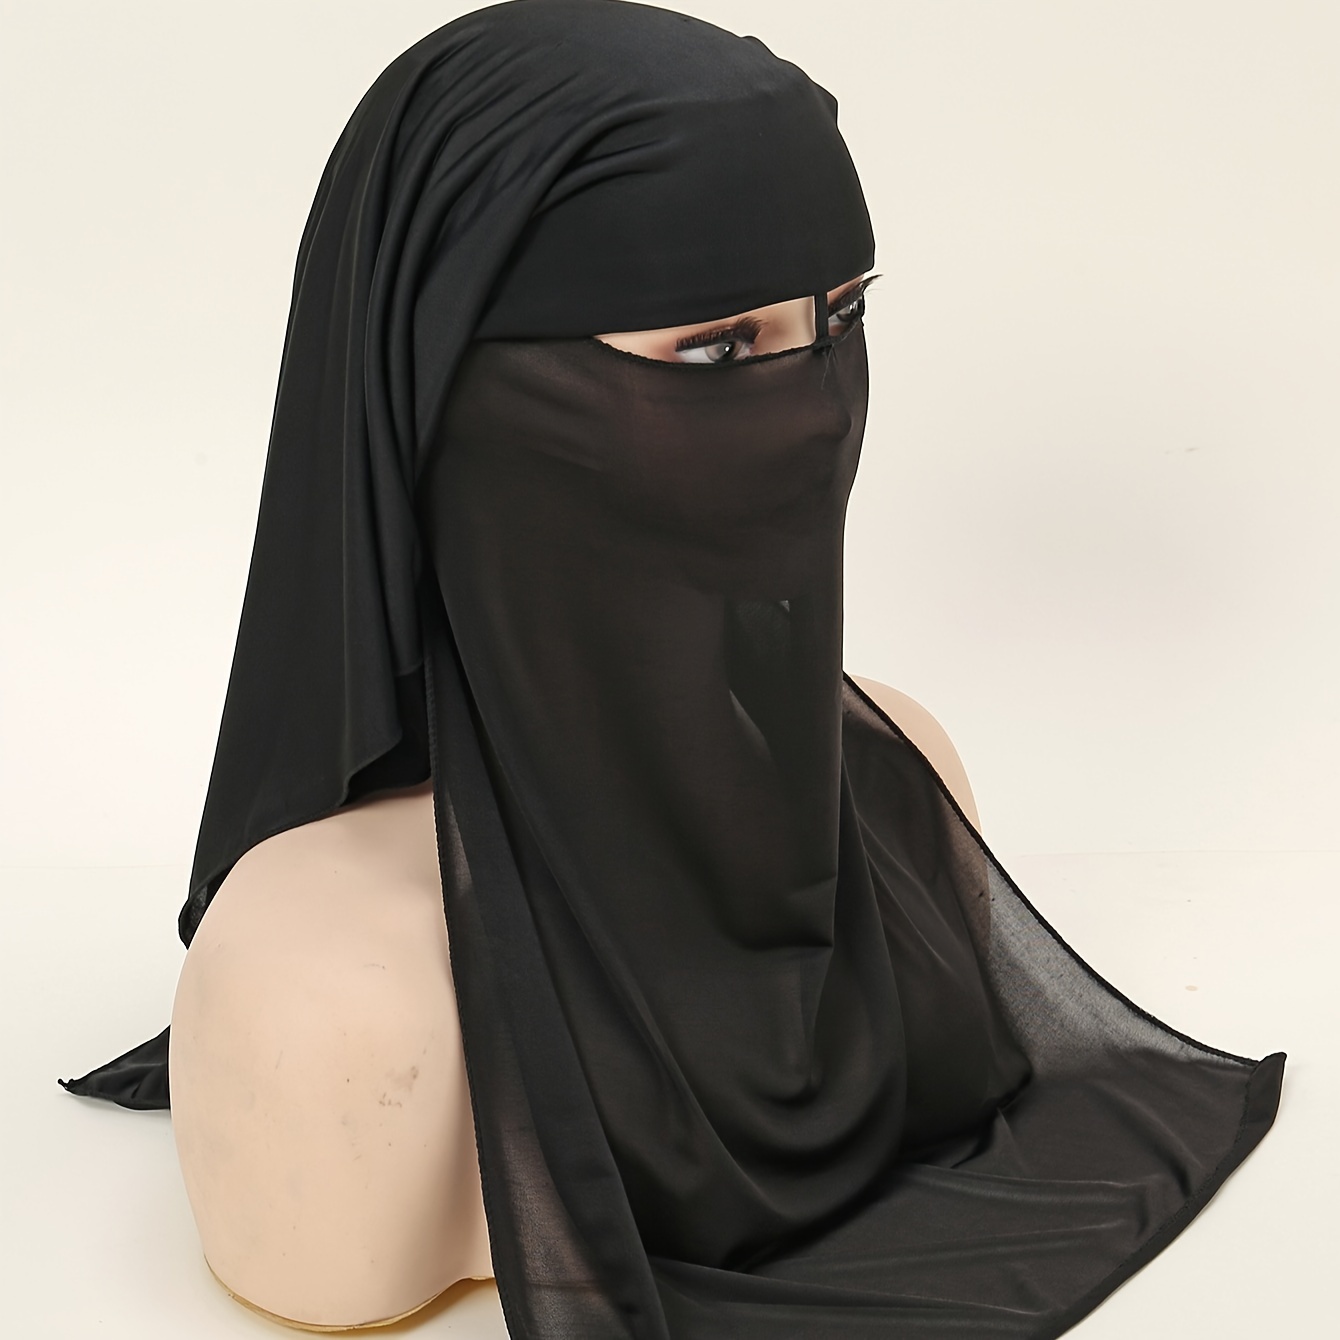 black chiffon niqab hijab thin breathable mask elegant style sunscreen head wrap for women for eid